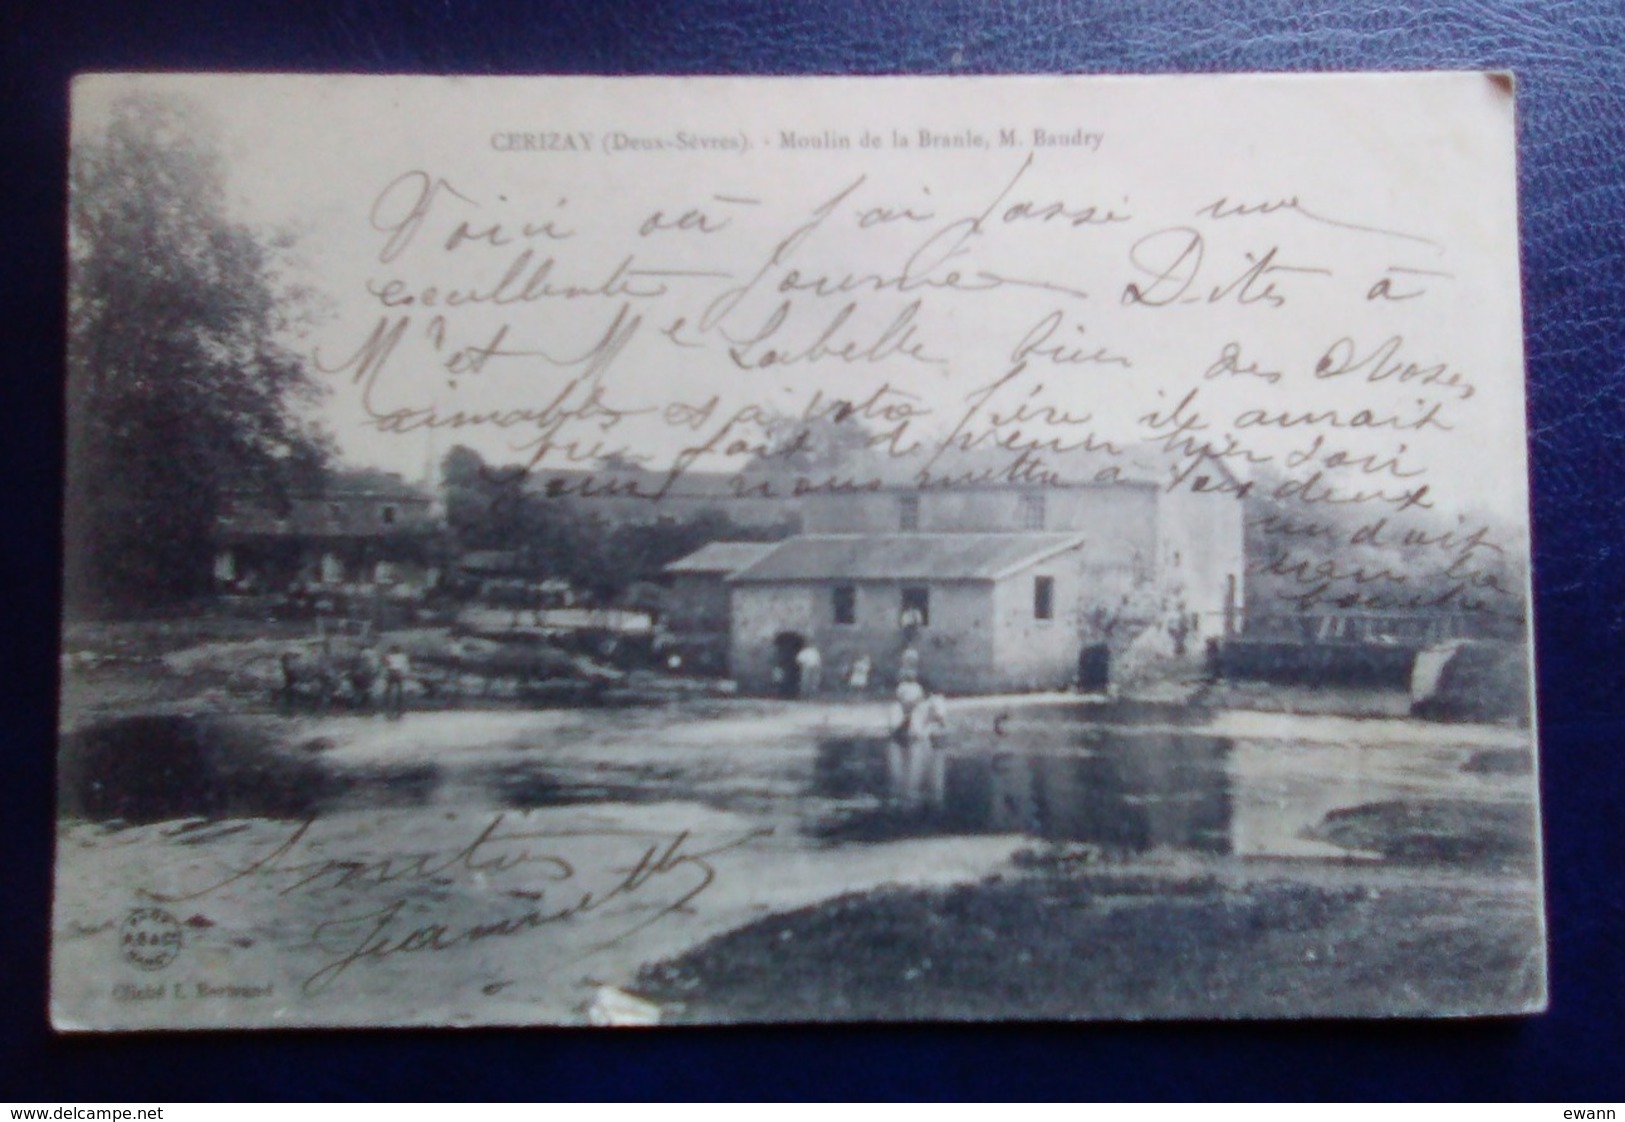 Carte Postale Ancienne -Cerizay - Moulin De La Branle, M.Baudry - Cerizay